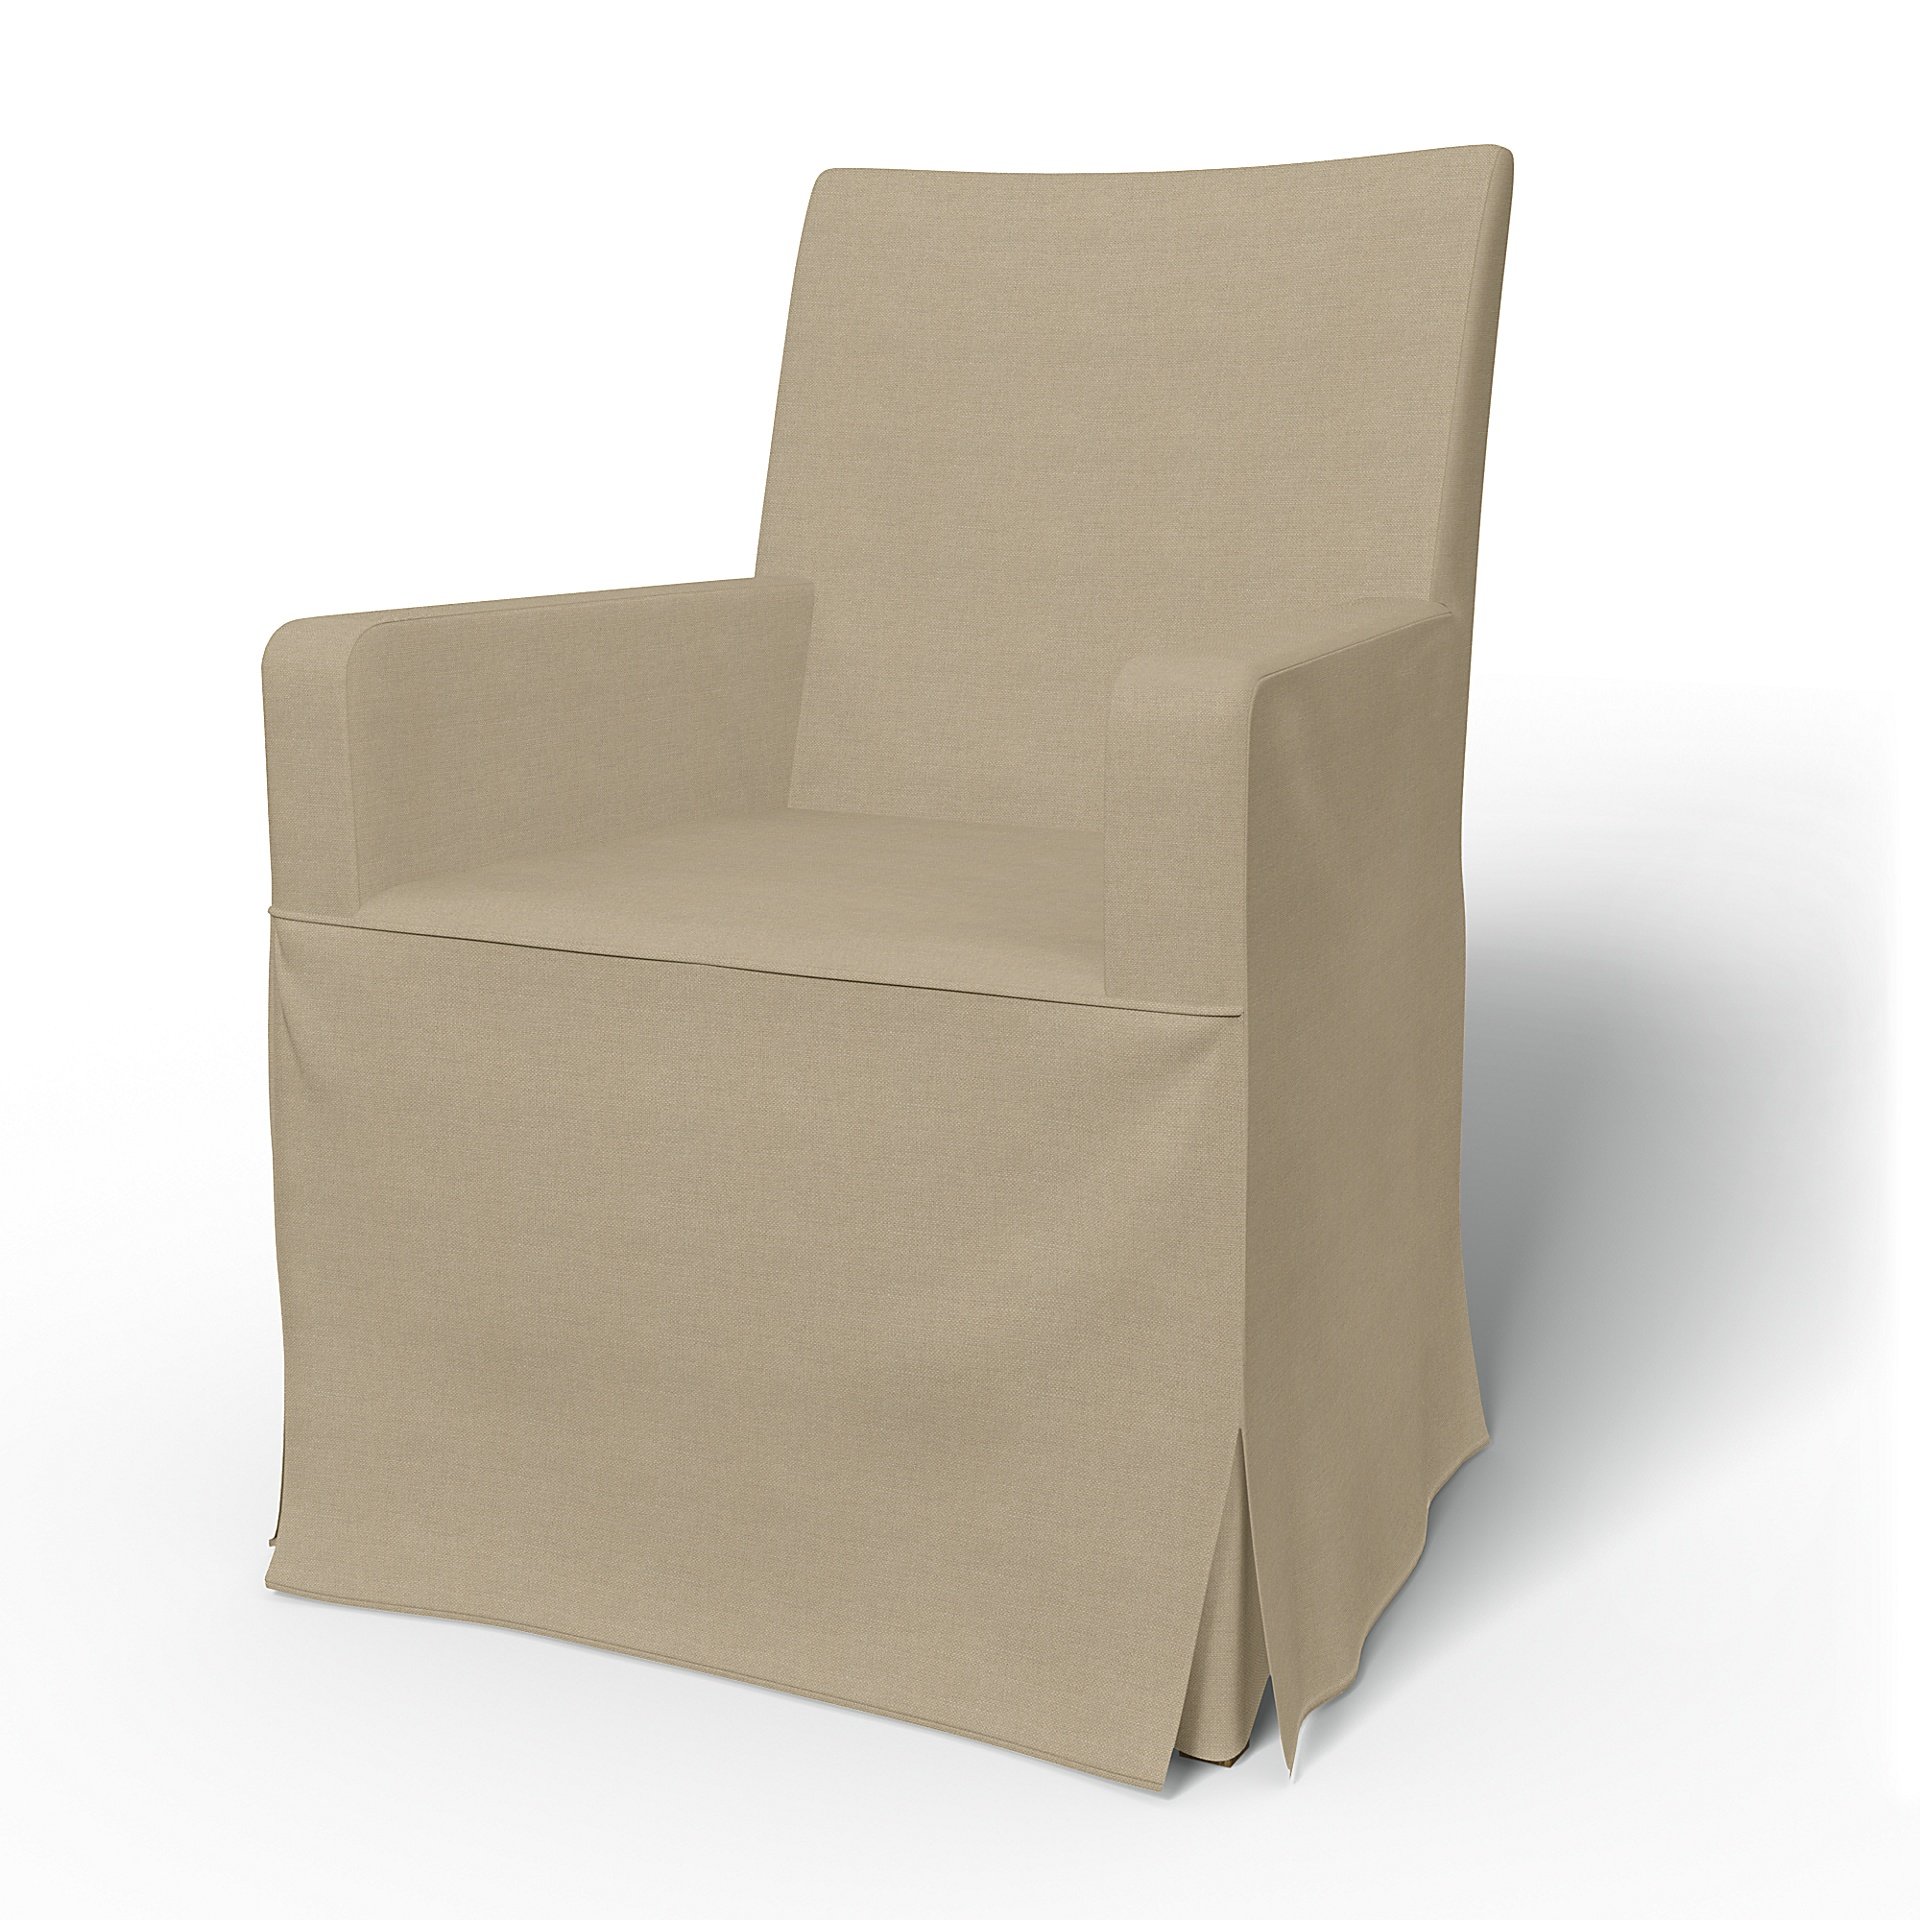 IKEA - Henriksdal, Chair cover w/ armrests, long skirt box pleat, Tan, Linen - Bemz